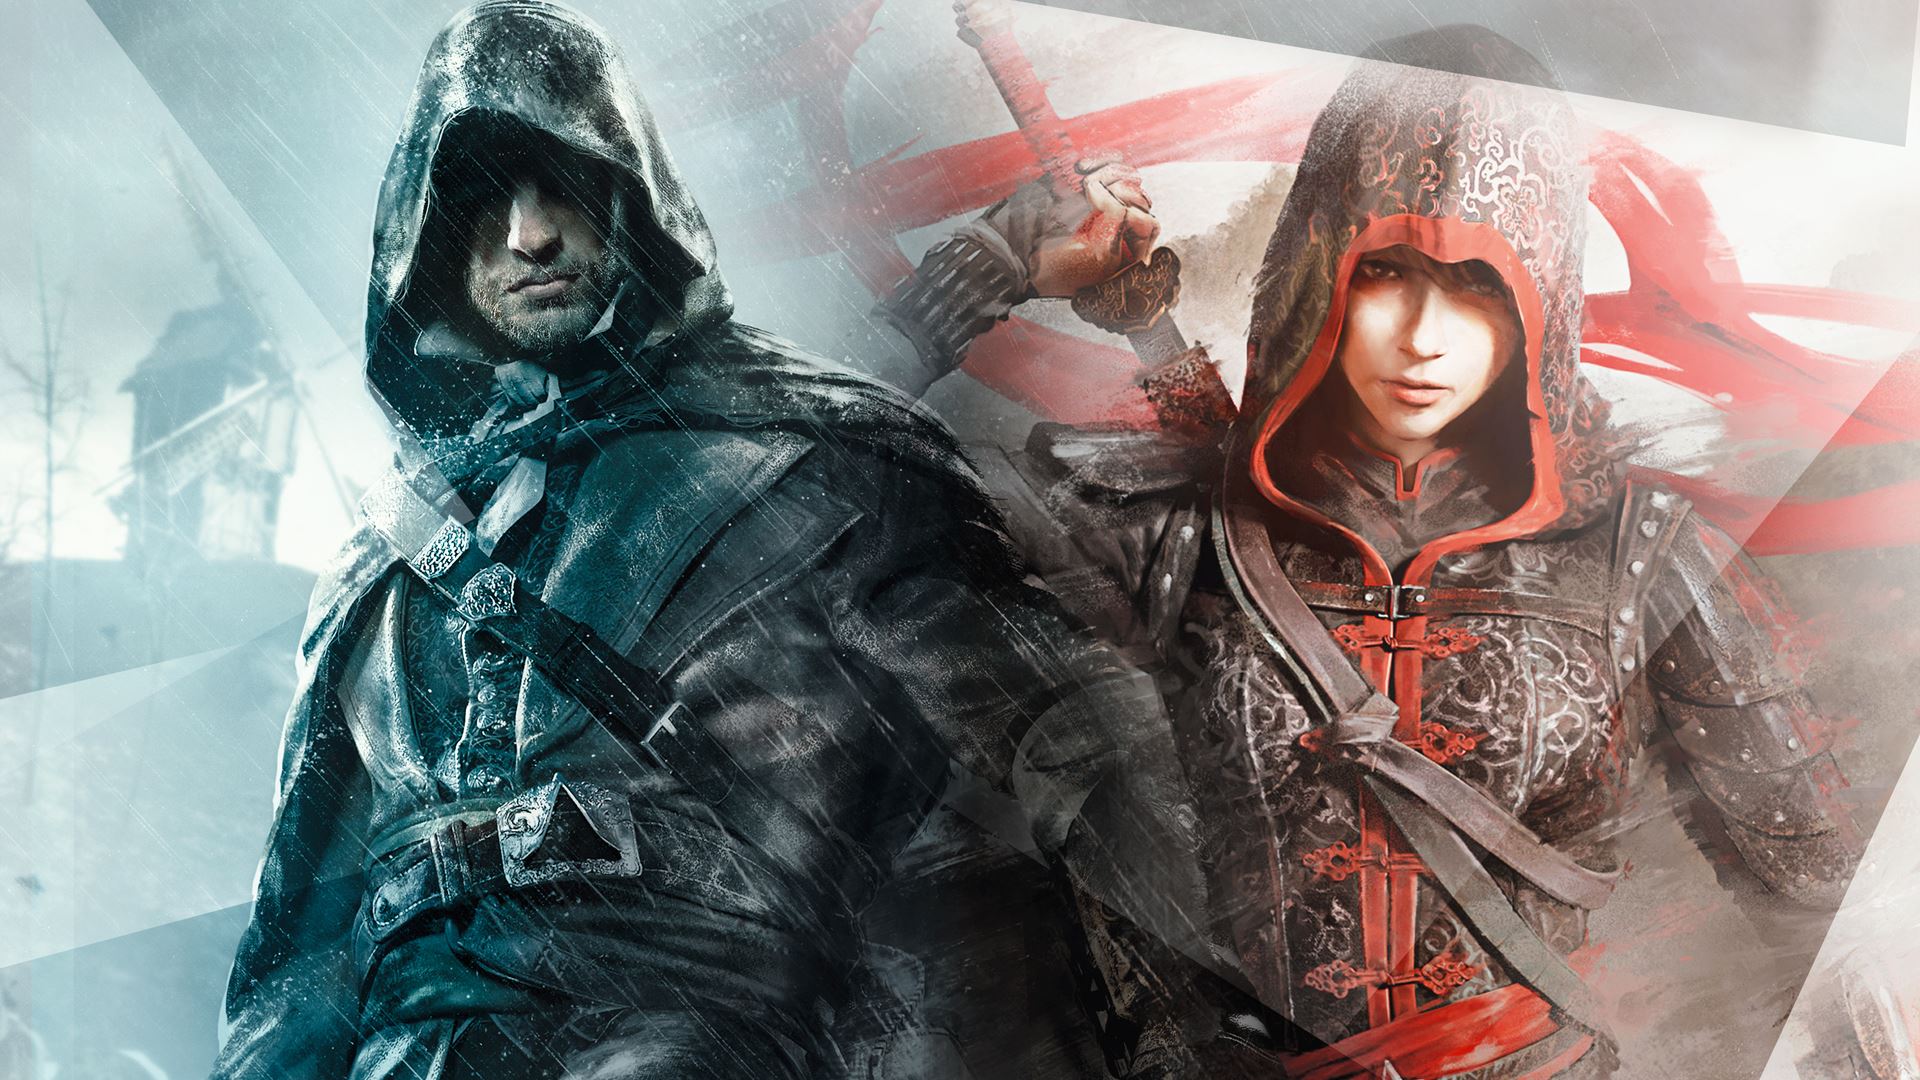 48+] Assassin's Creed China Wallpaper - WallpaperSafari